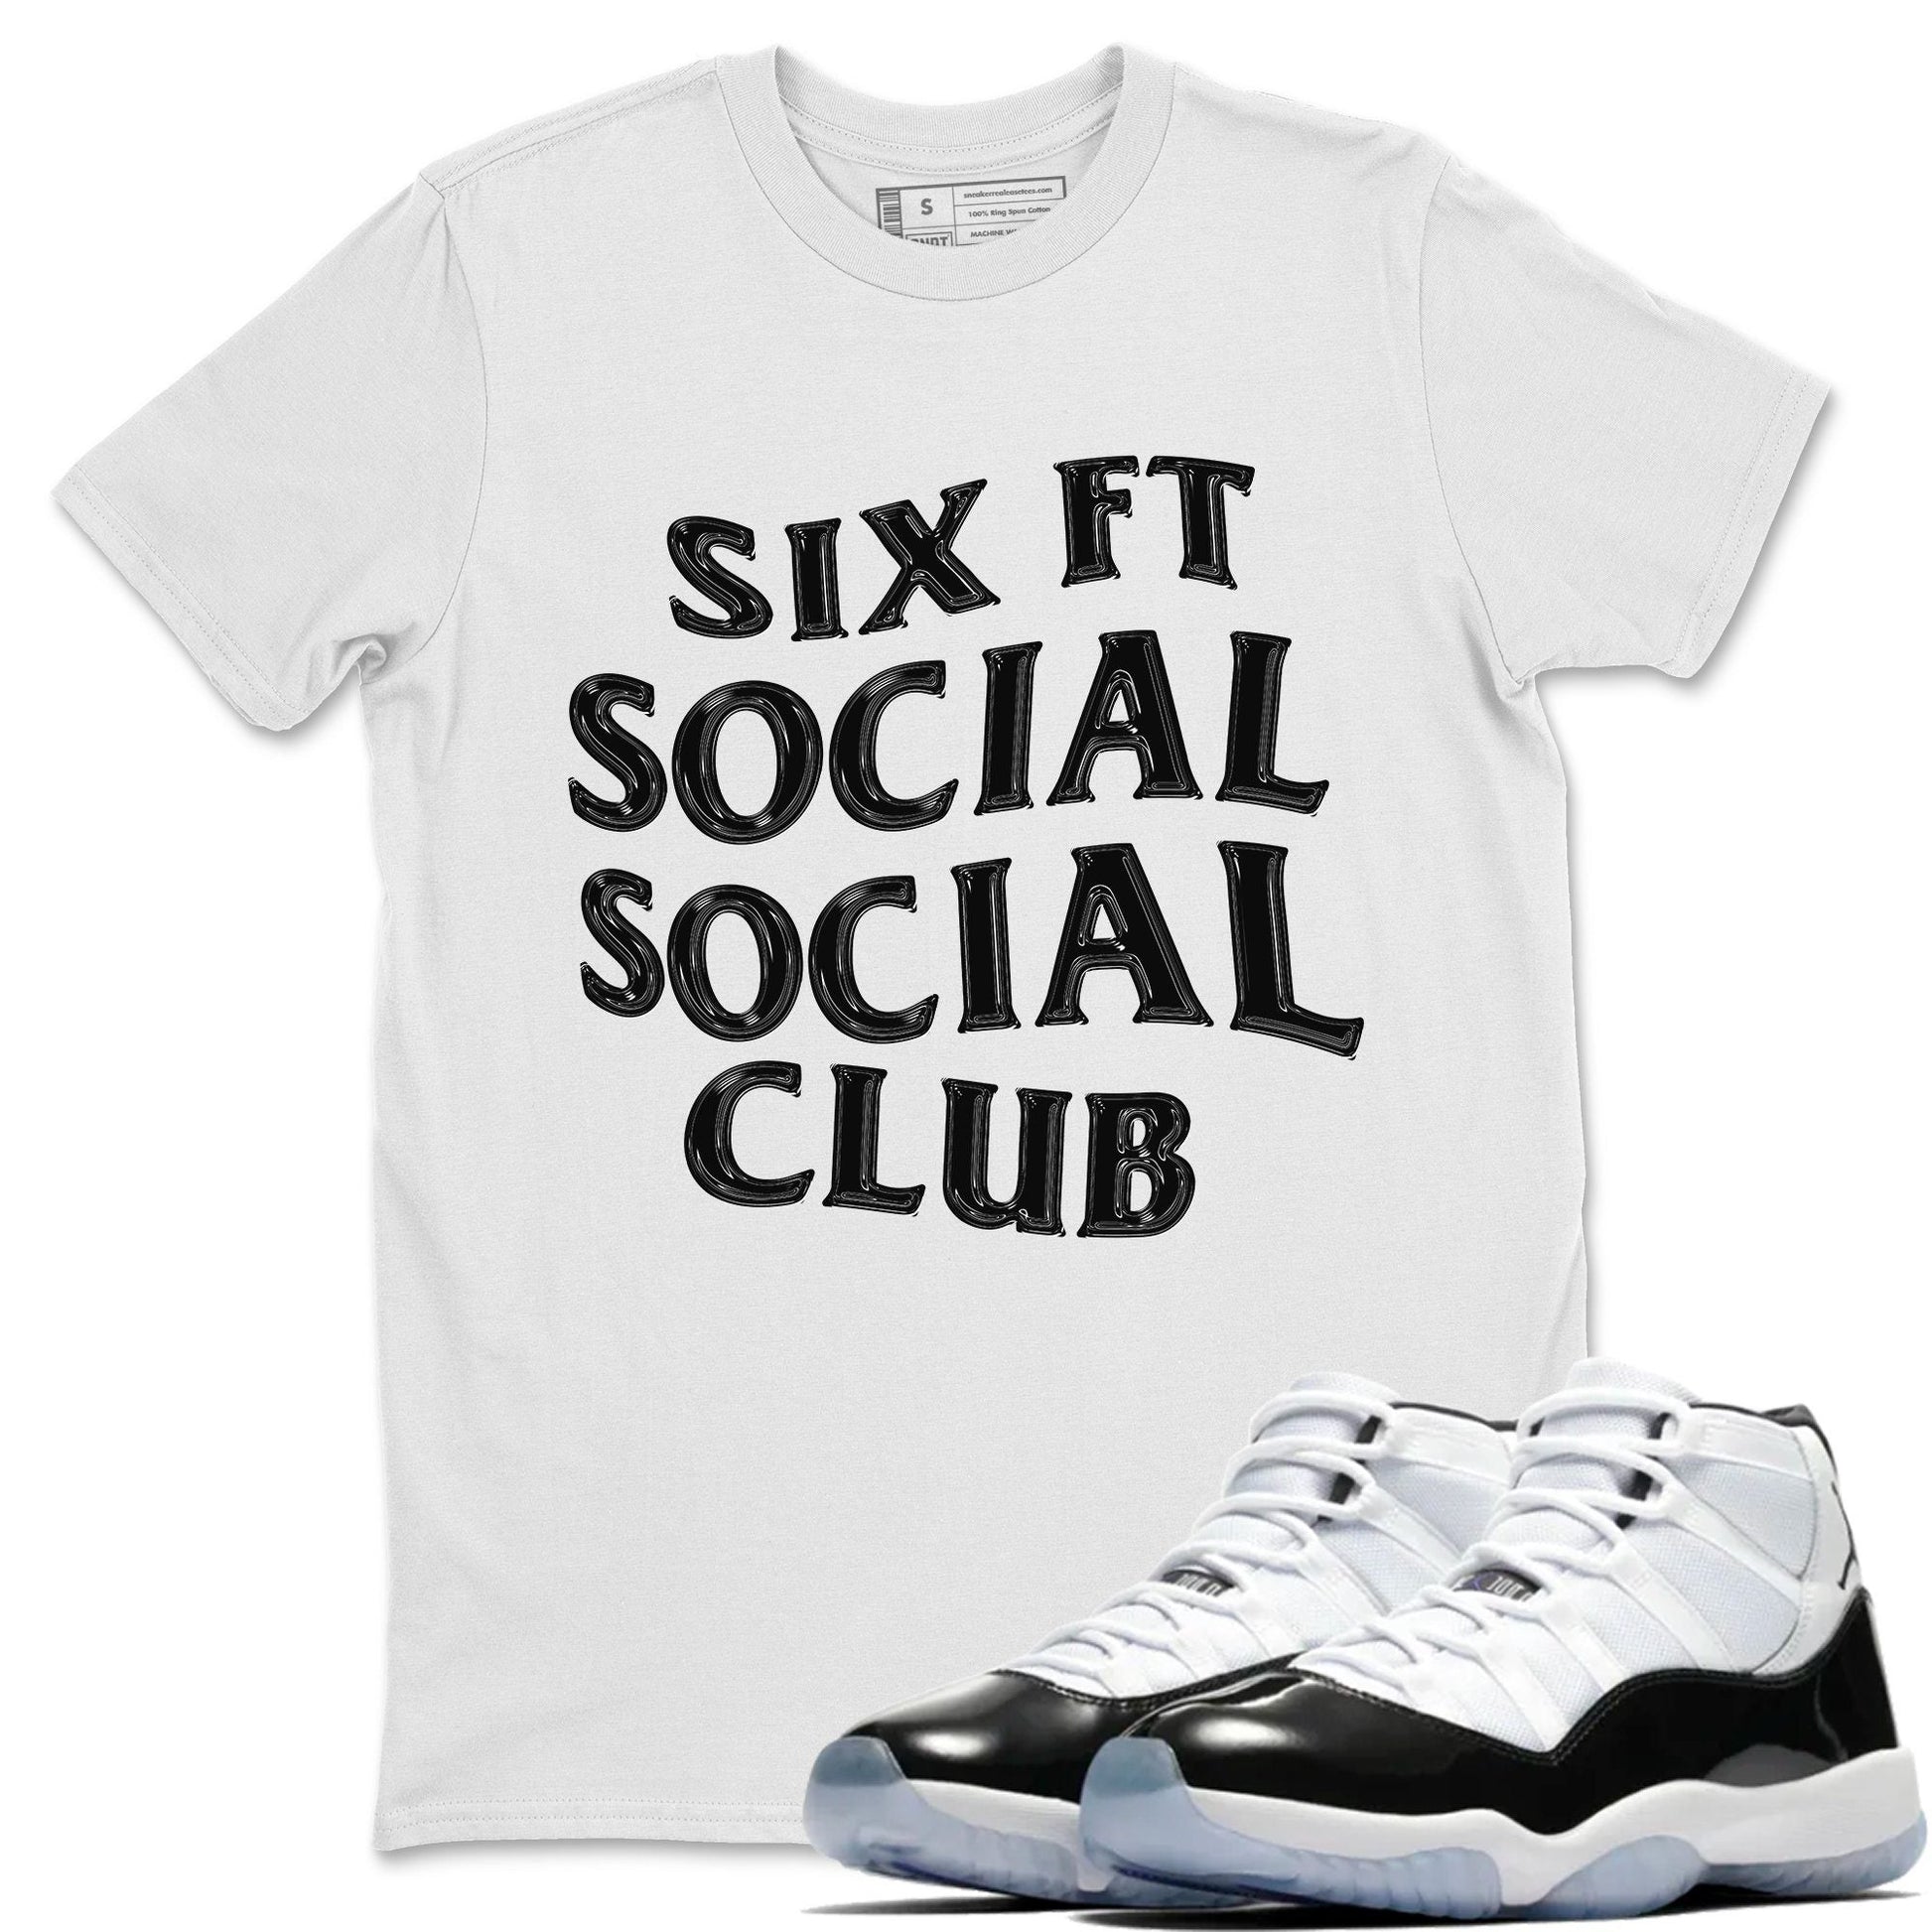 Jordan 11 Concord Sneaker Match Tees Six Ft Social Club Sneaker Tees Jordan 11 Concord Sneaker Release Tees Unisex Shirts